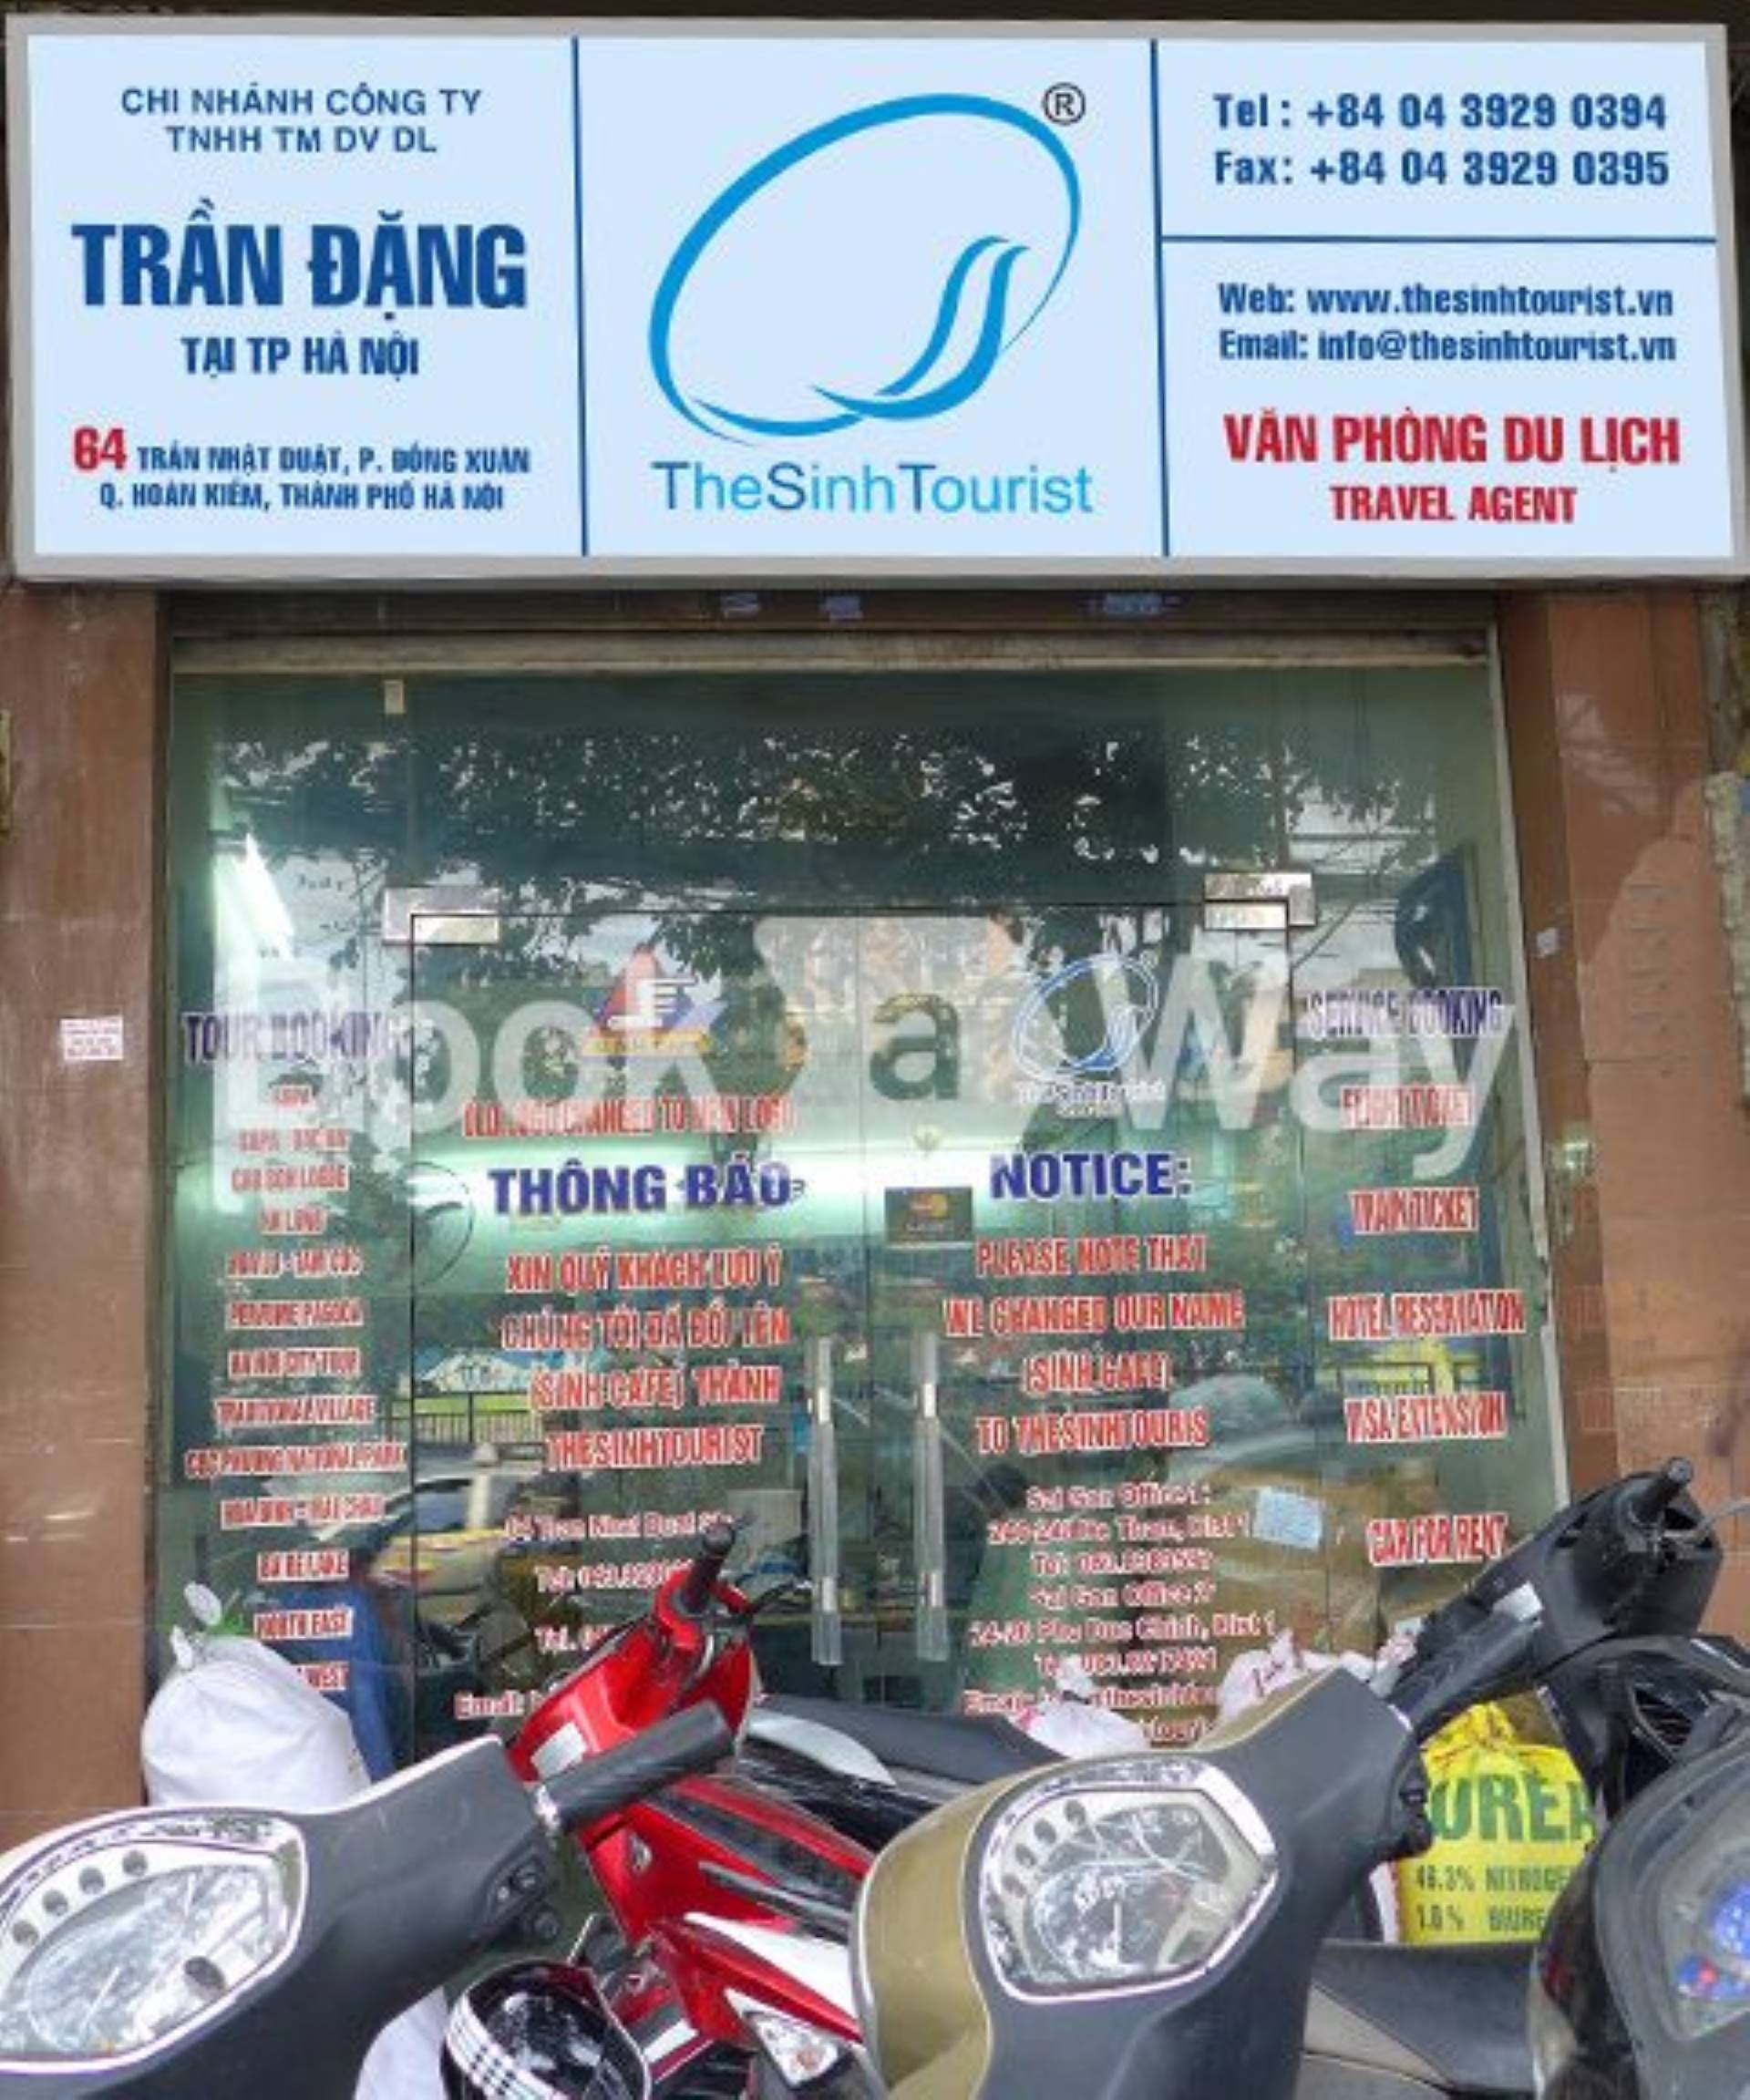 The Sinh Tourist 64 Tran Nhat Duat office